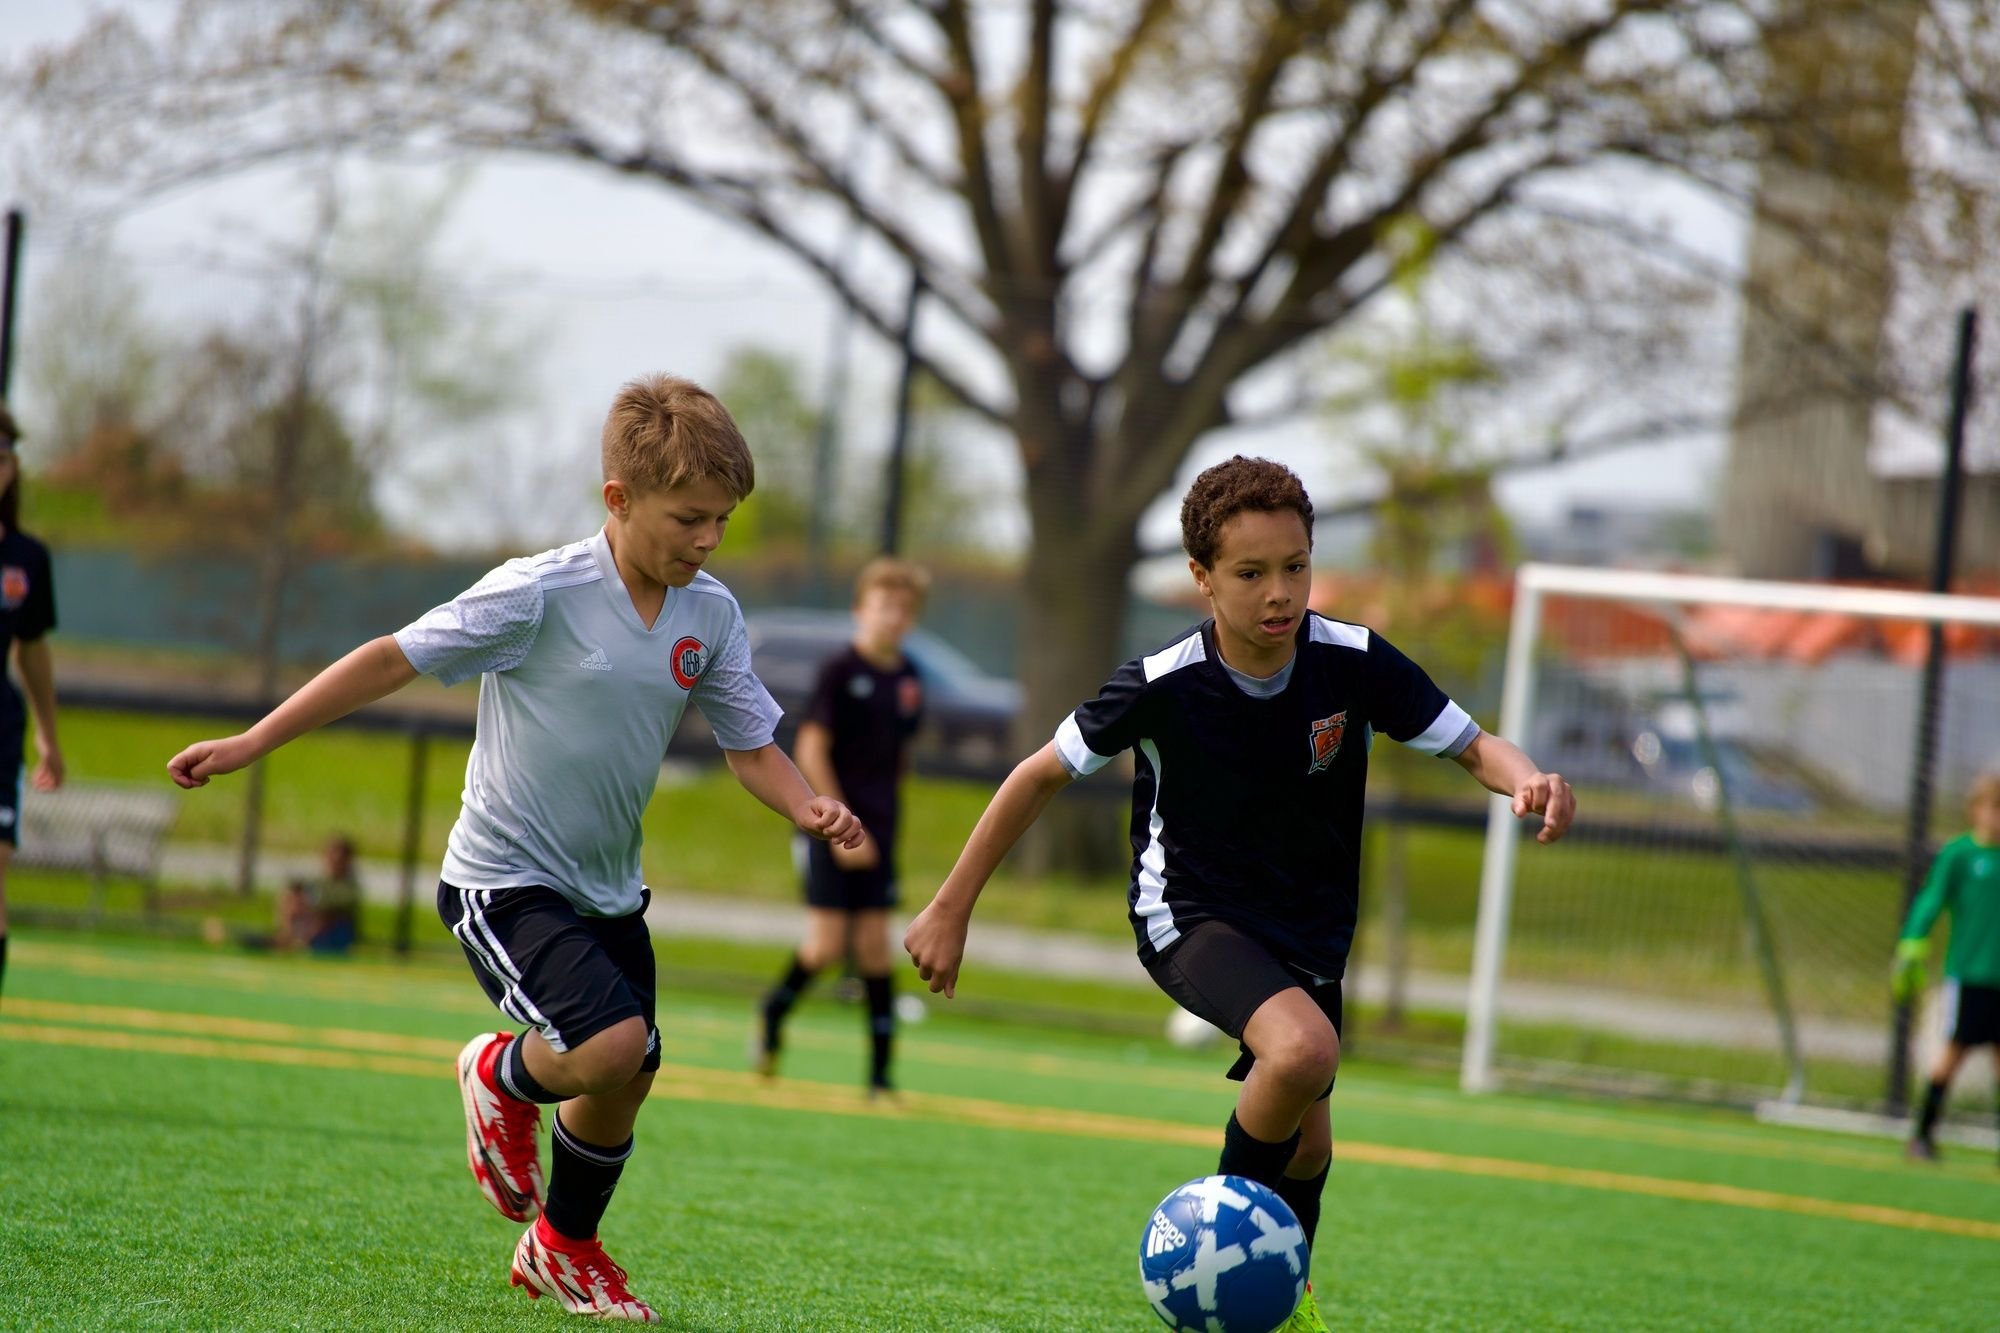 Dc-way-soccer-club-for-kids-in-washington-dc-8.jpeg